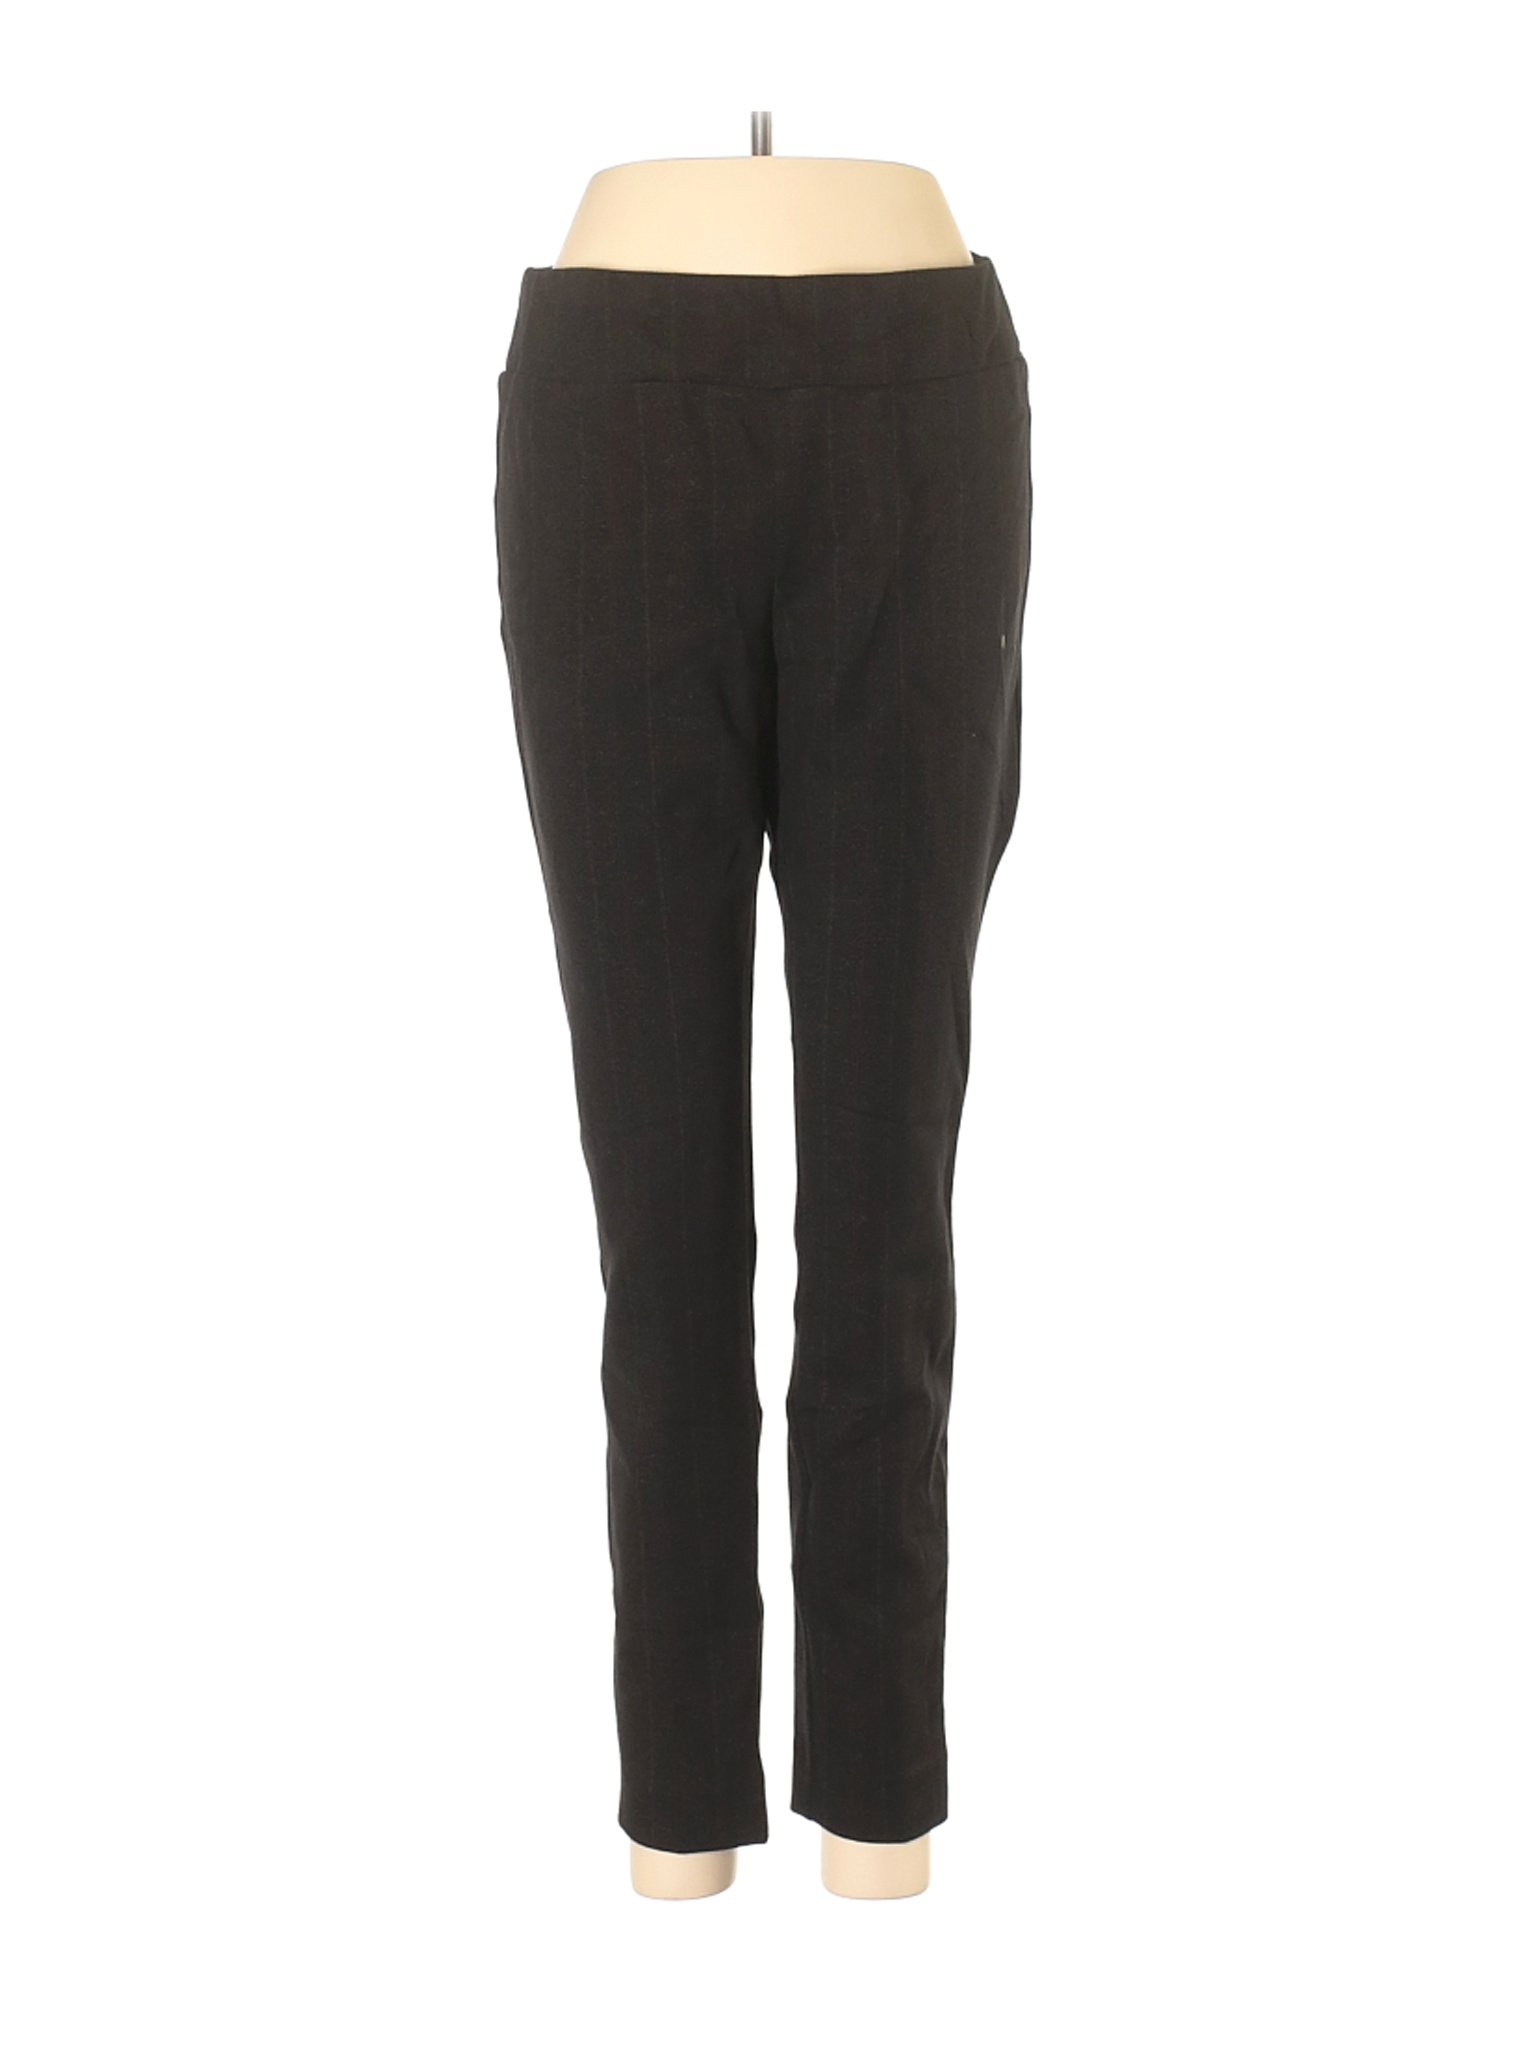 Insight Women Black Casual Pants 8 | eBay